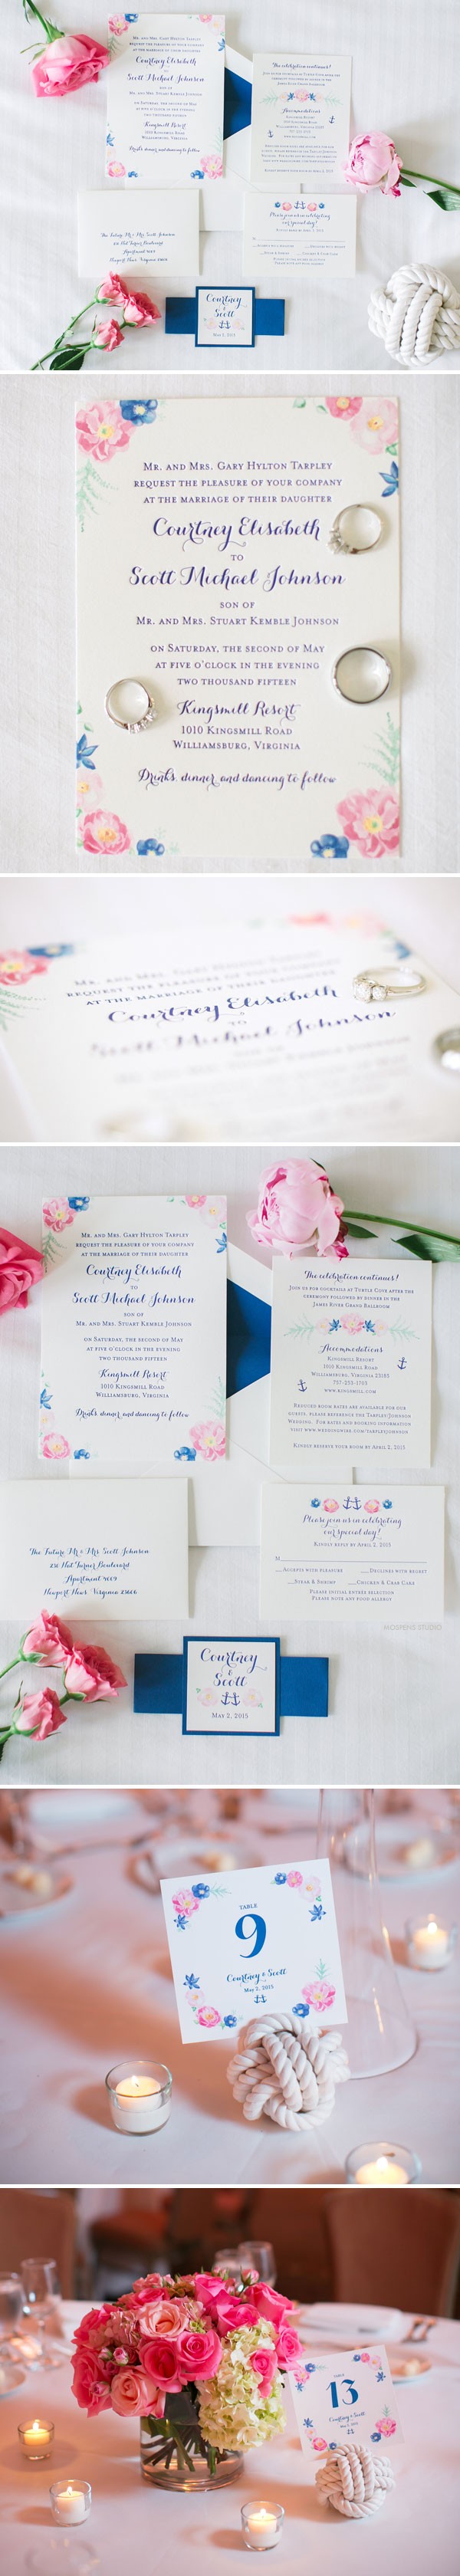 Elegant Floral Wedding Invitations - The custom design features original watercolor flowers and anchors artwork, letterpress printing, handmade custom belt, and envelope liner. www.mospensstudio.com